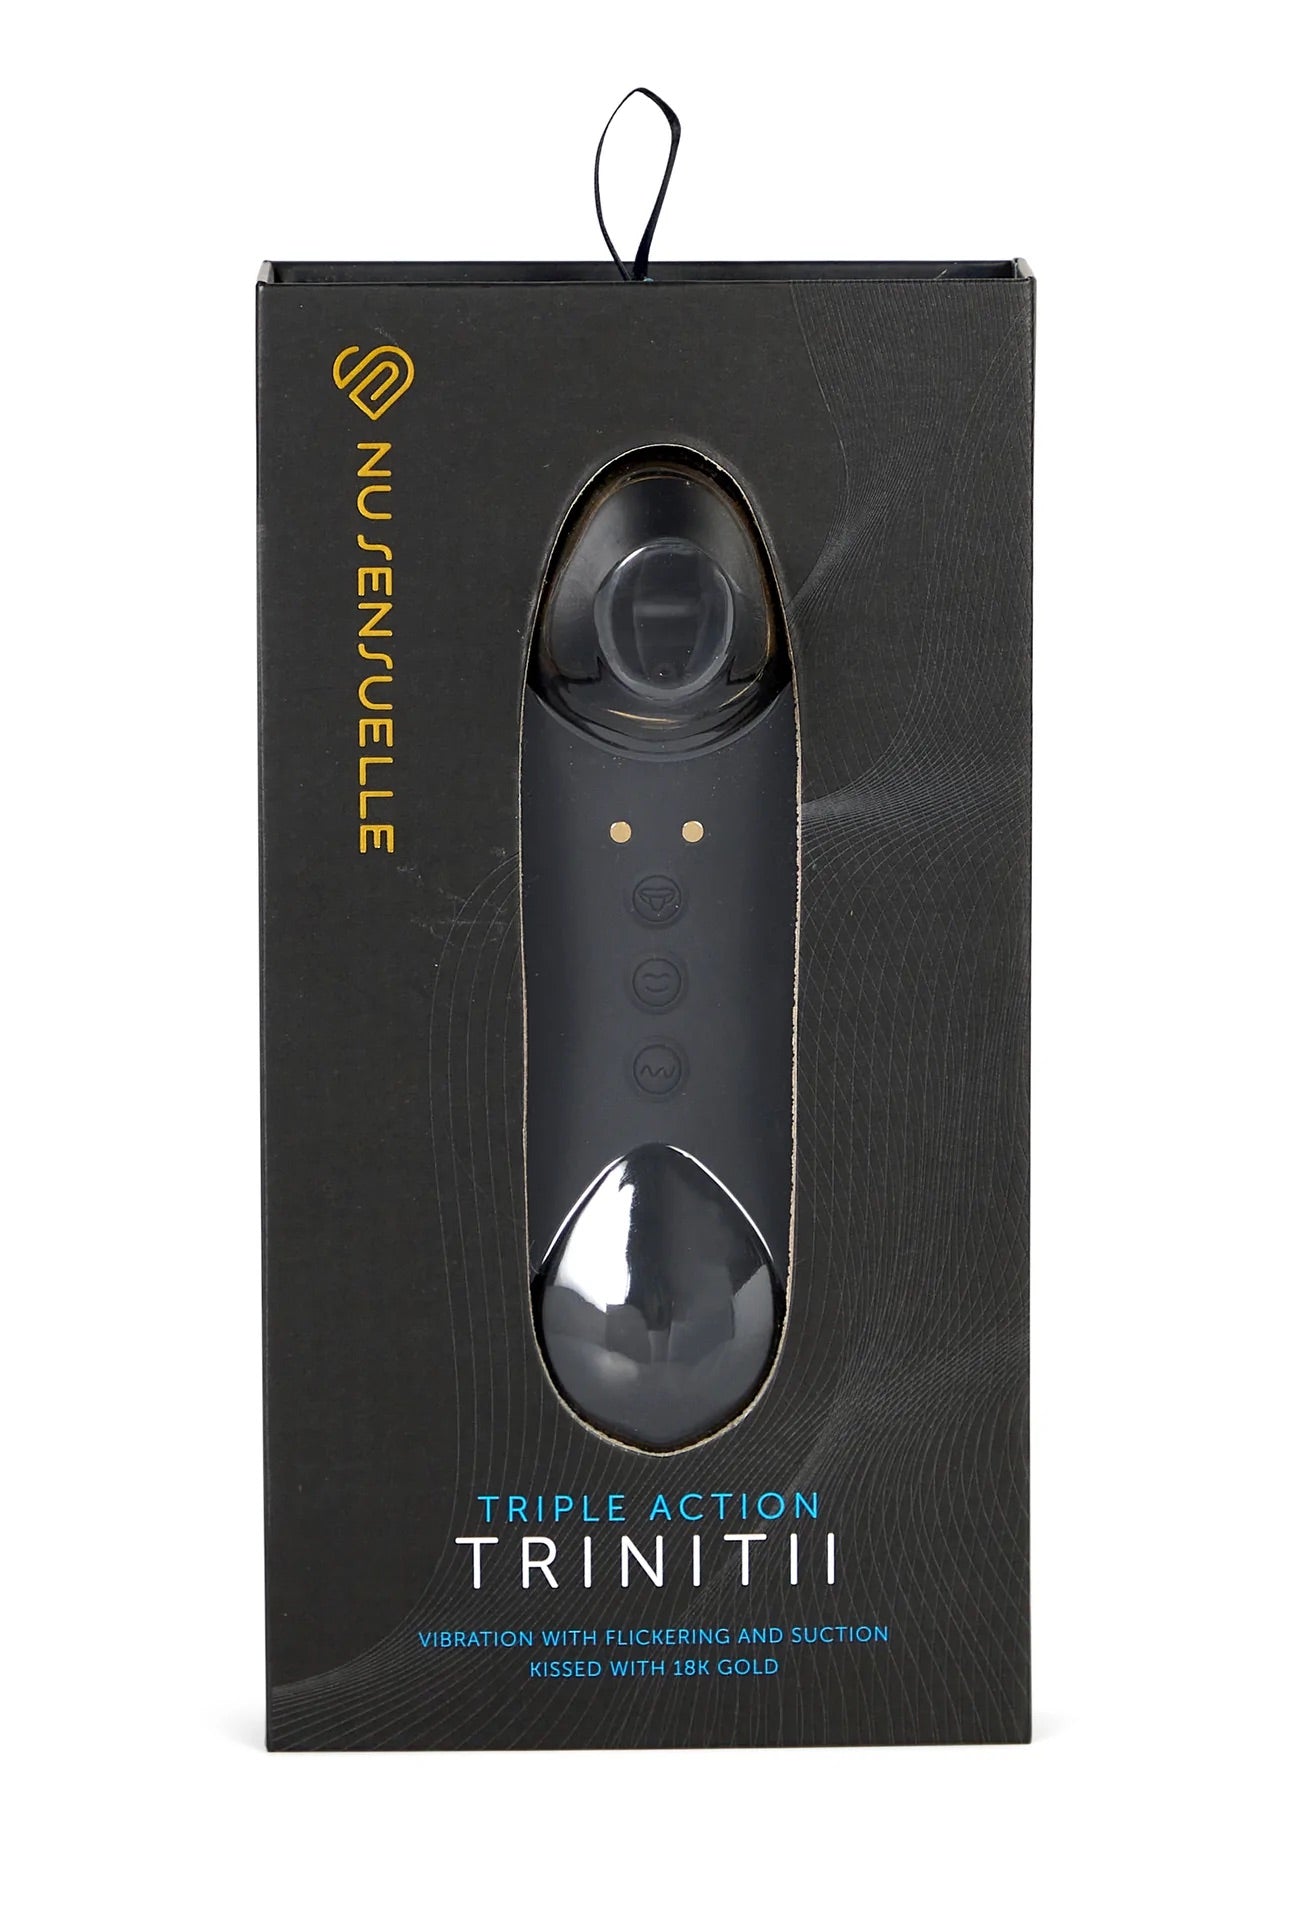 Nu Sensuelle - TRINITII Clitoral Stimulator - Feel the Power! - Boink Adult Boutique www.boinkmuskoka.com